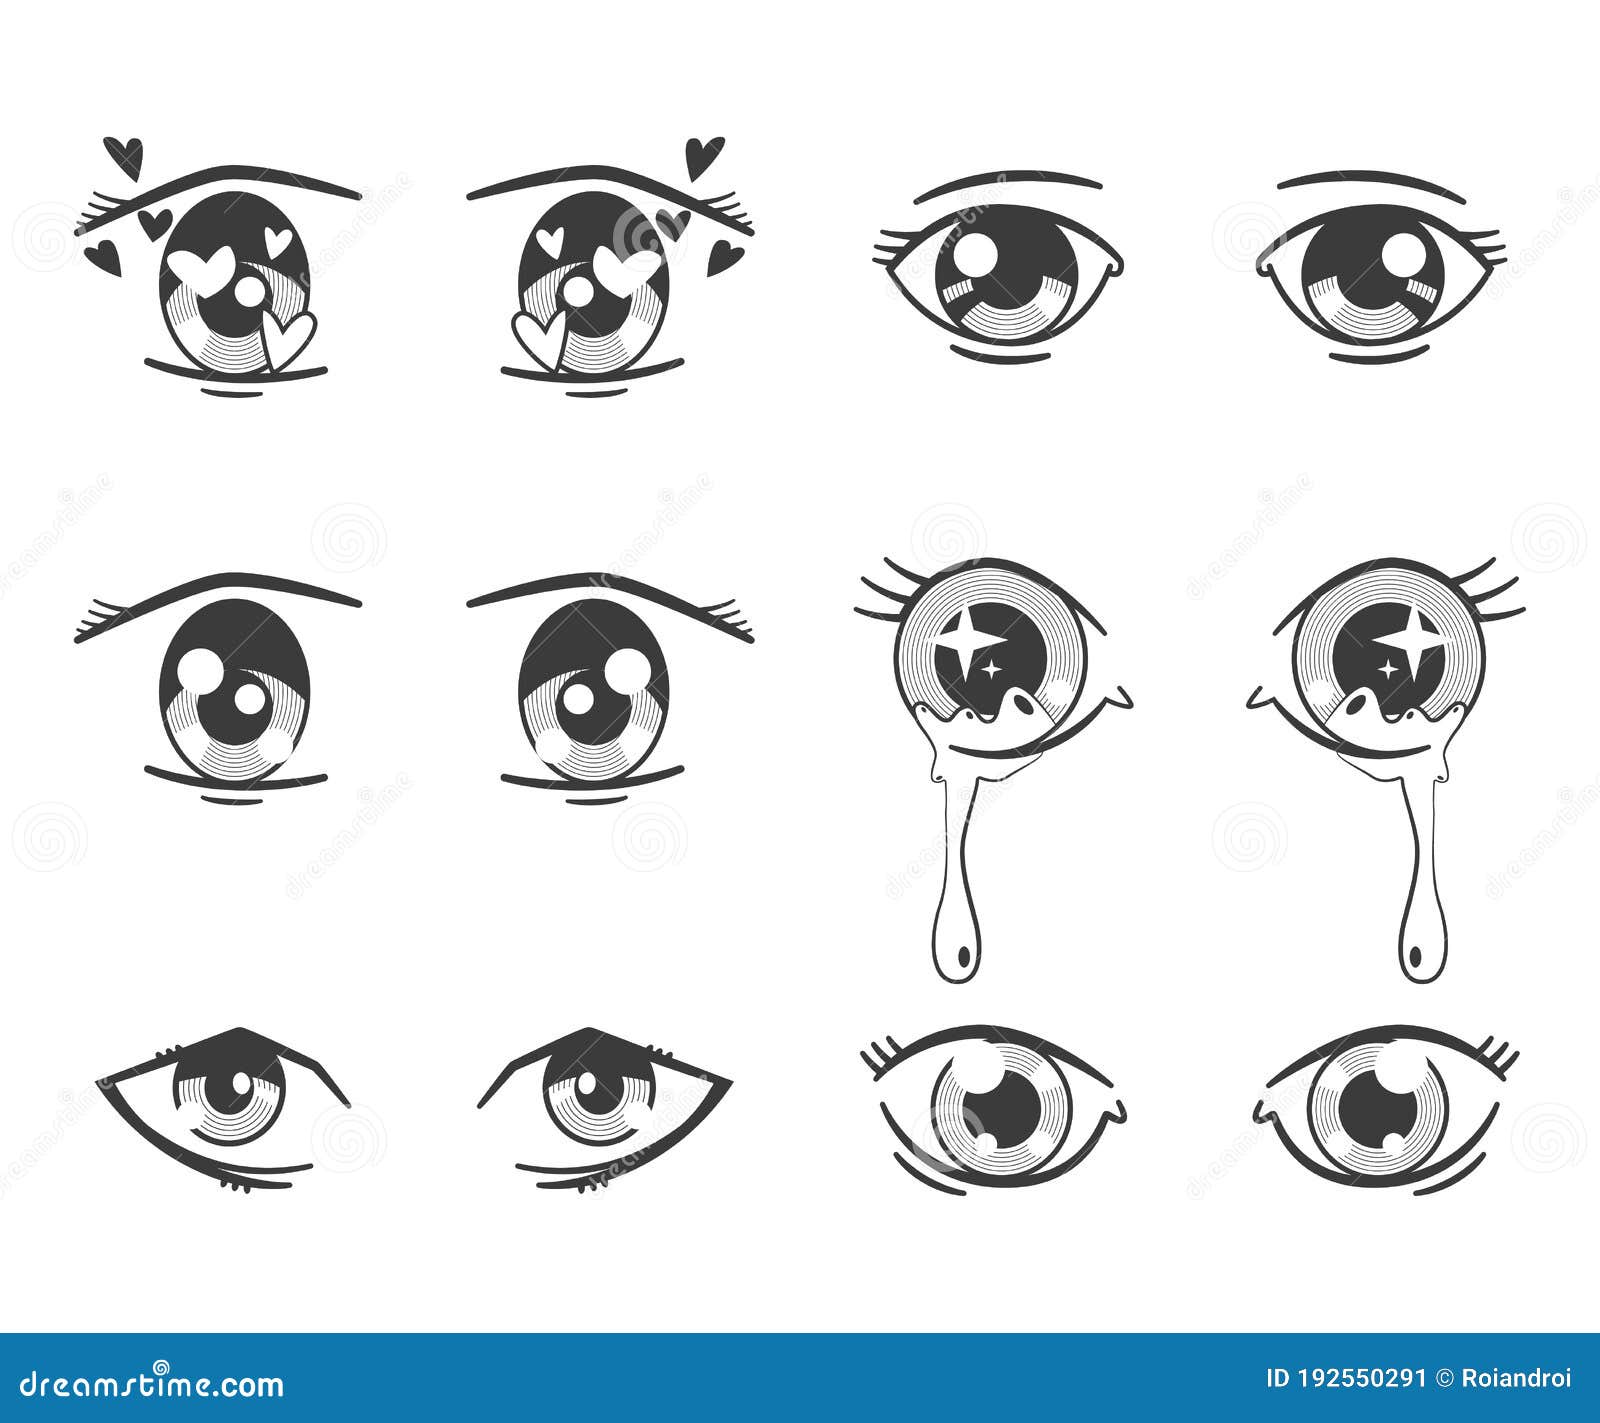 Anime Eyes Vector Cartoon Illustration Stock Vector - Illustration of ...